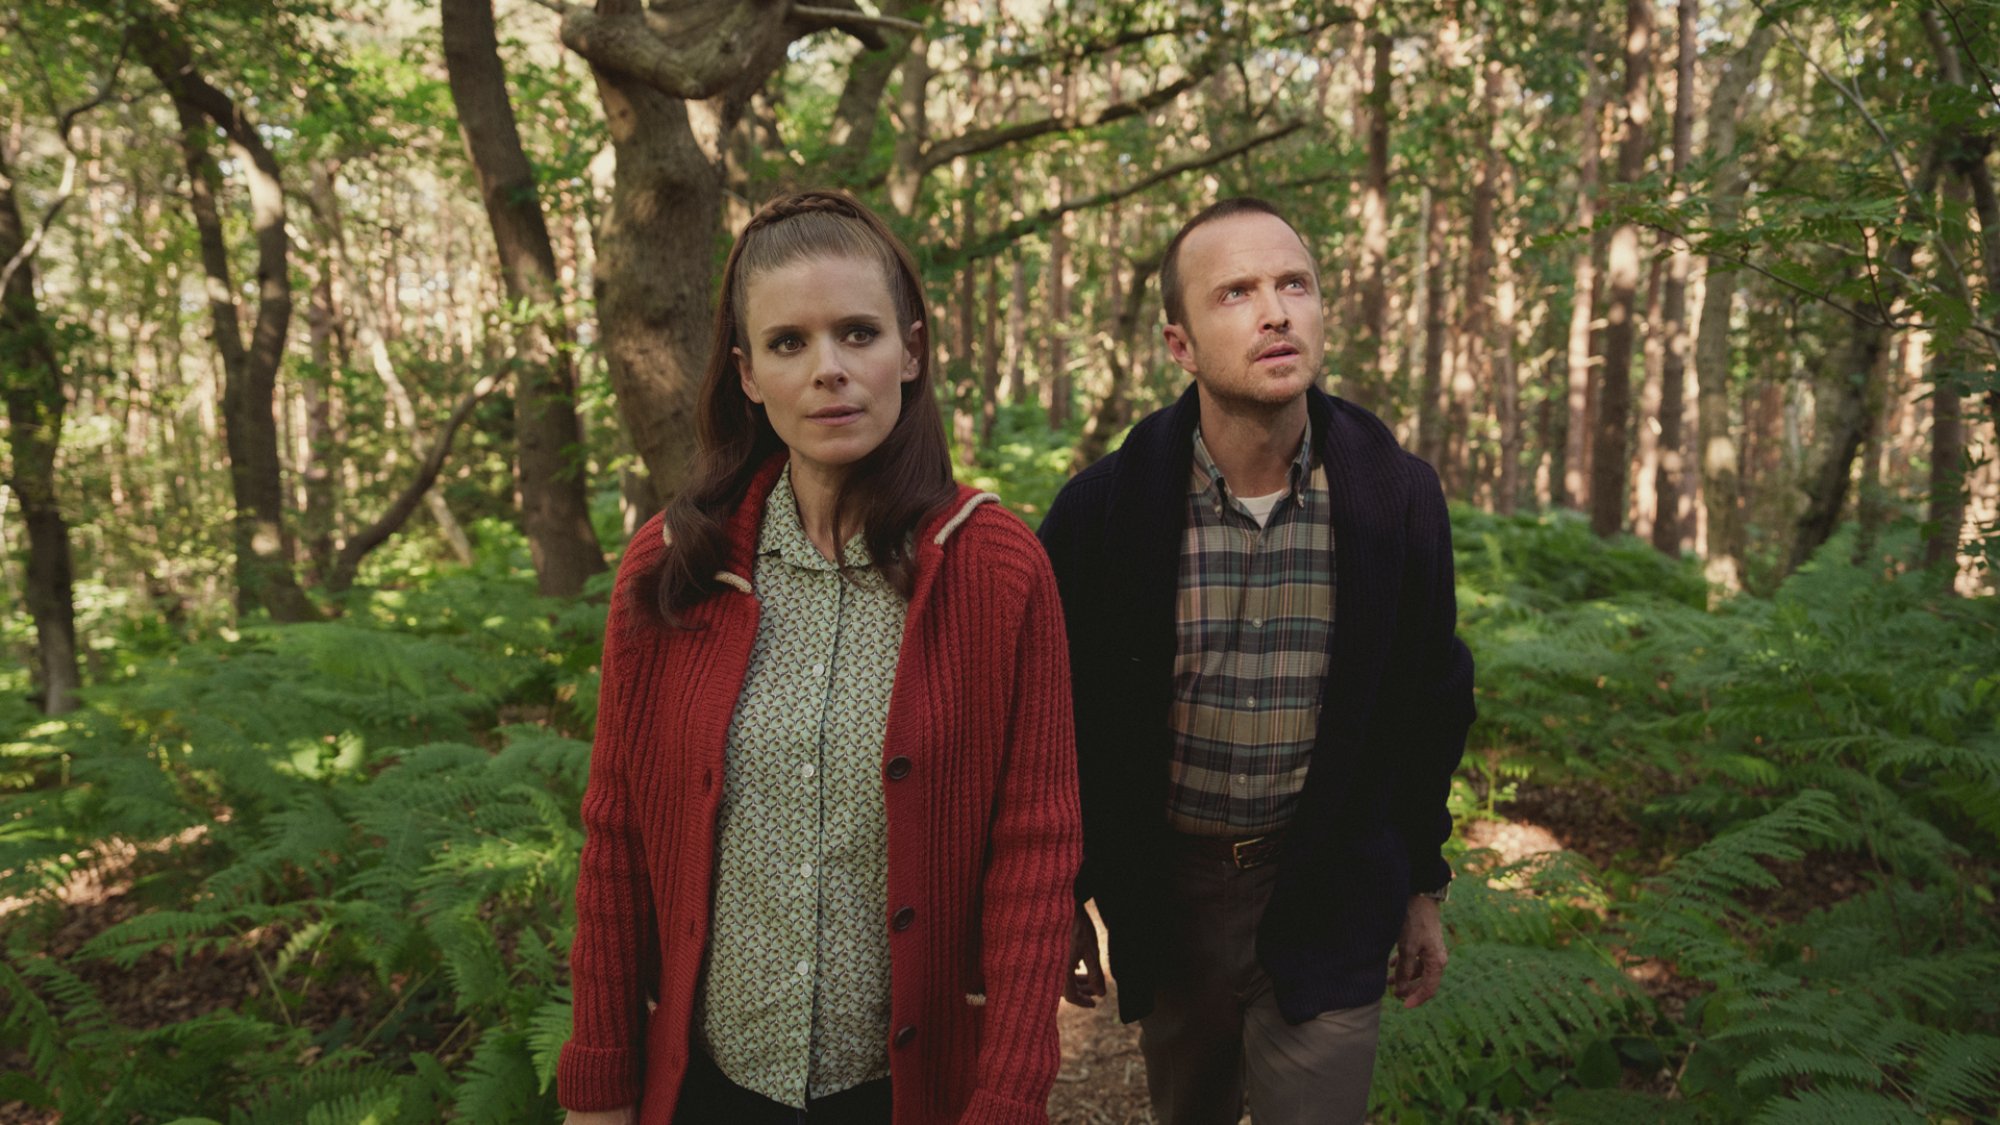 In the TV show "Black Mirror" Kate Mara and Aaron Paul walk through a wood.